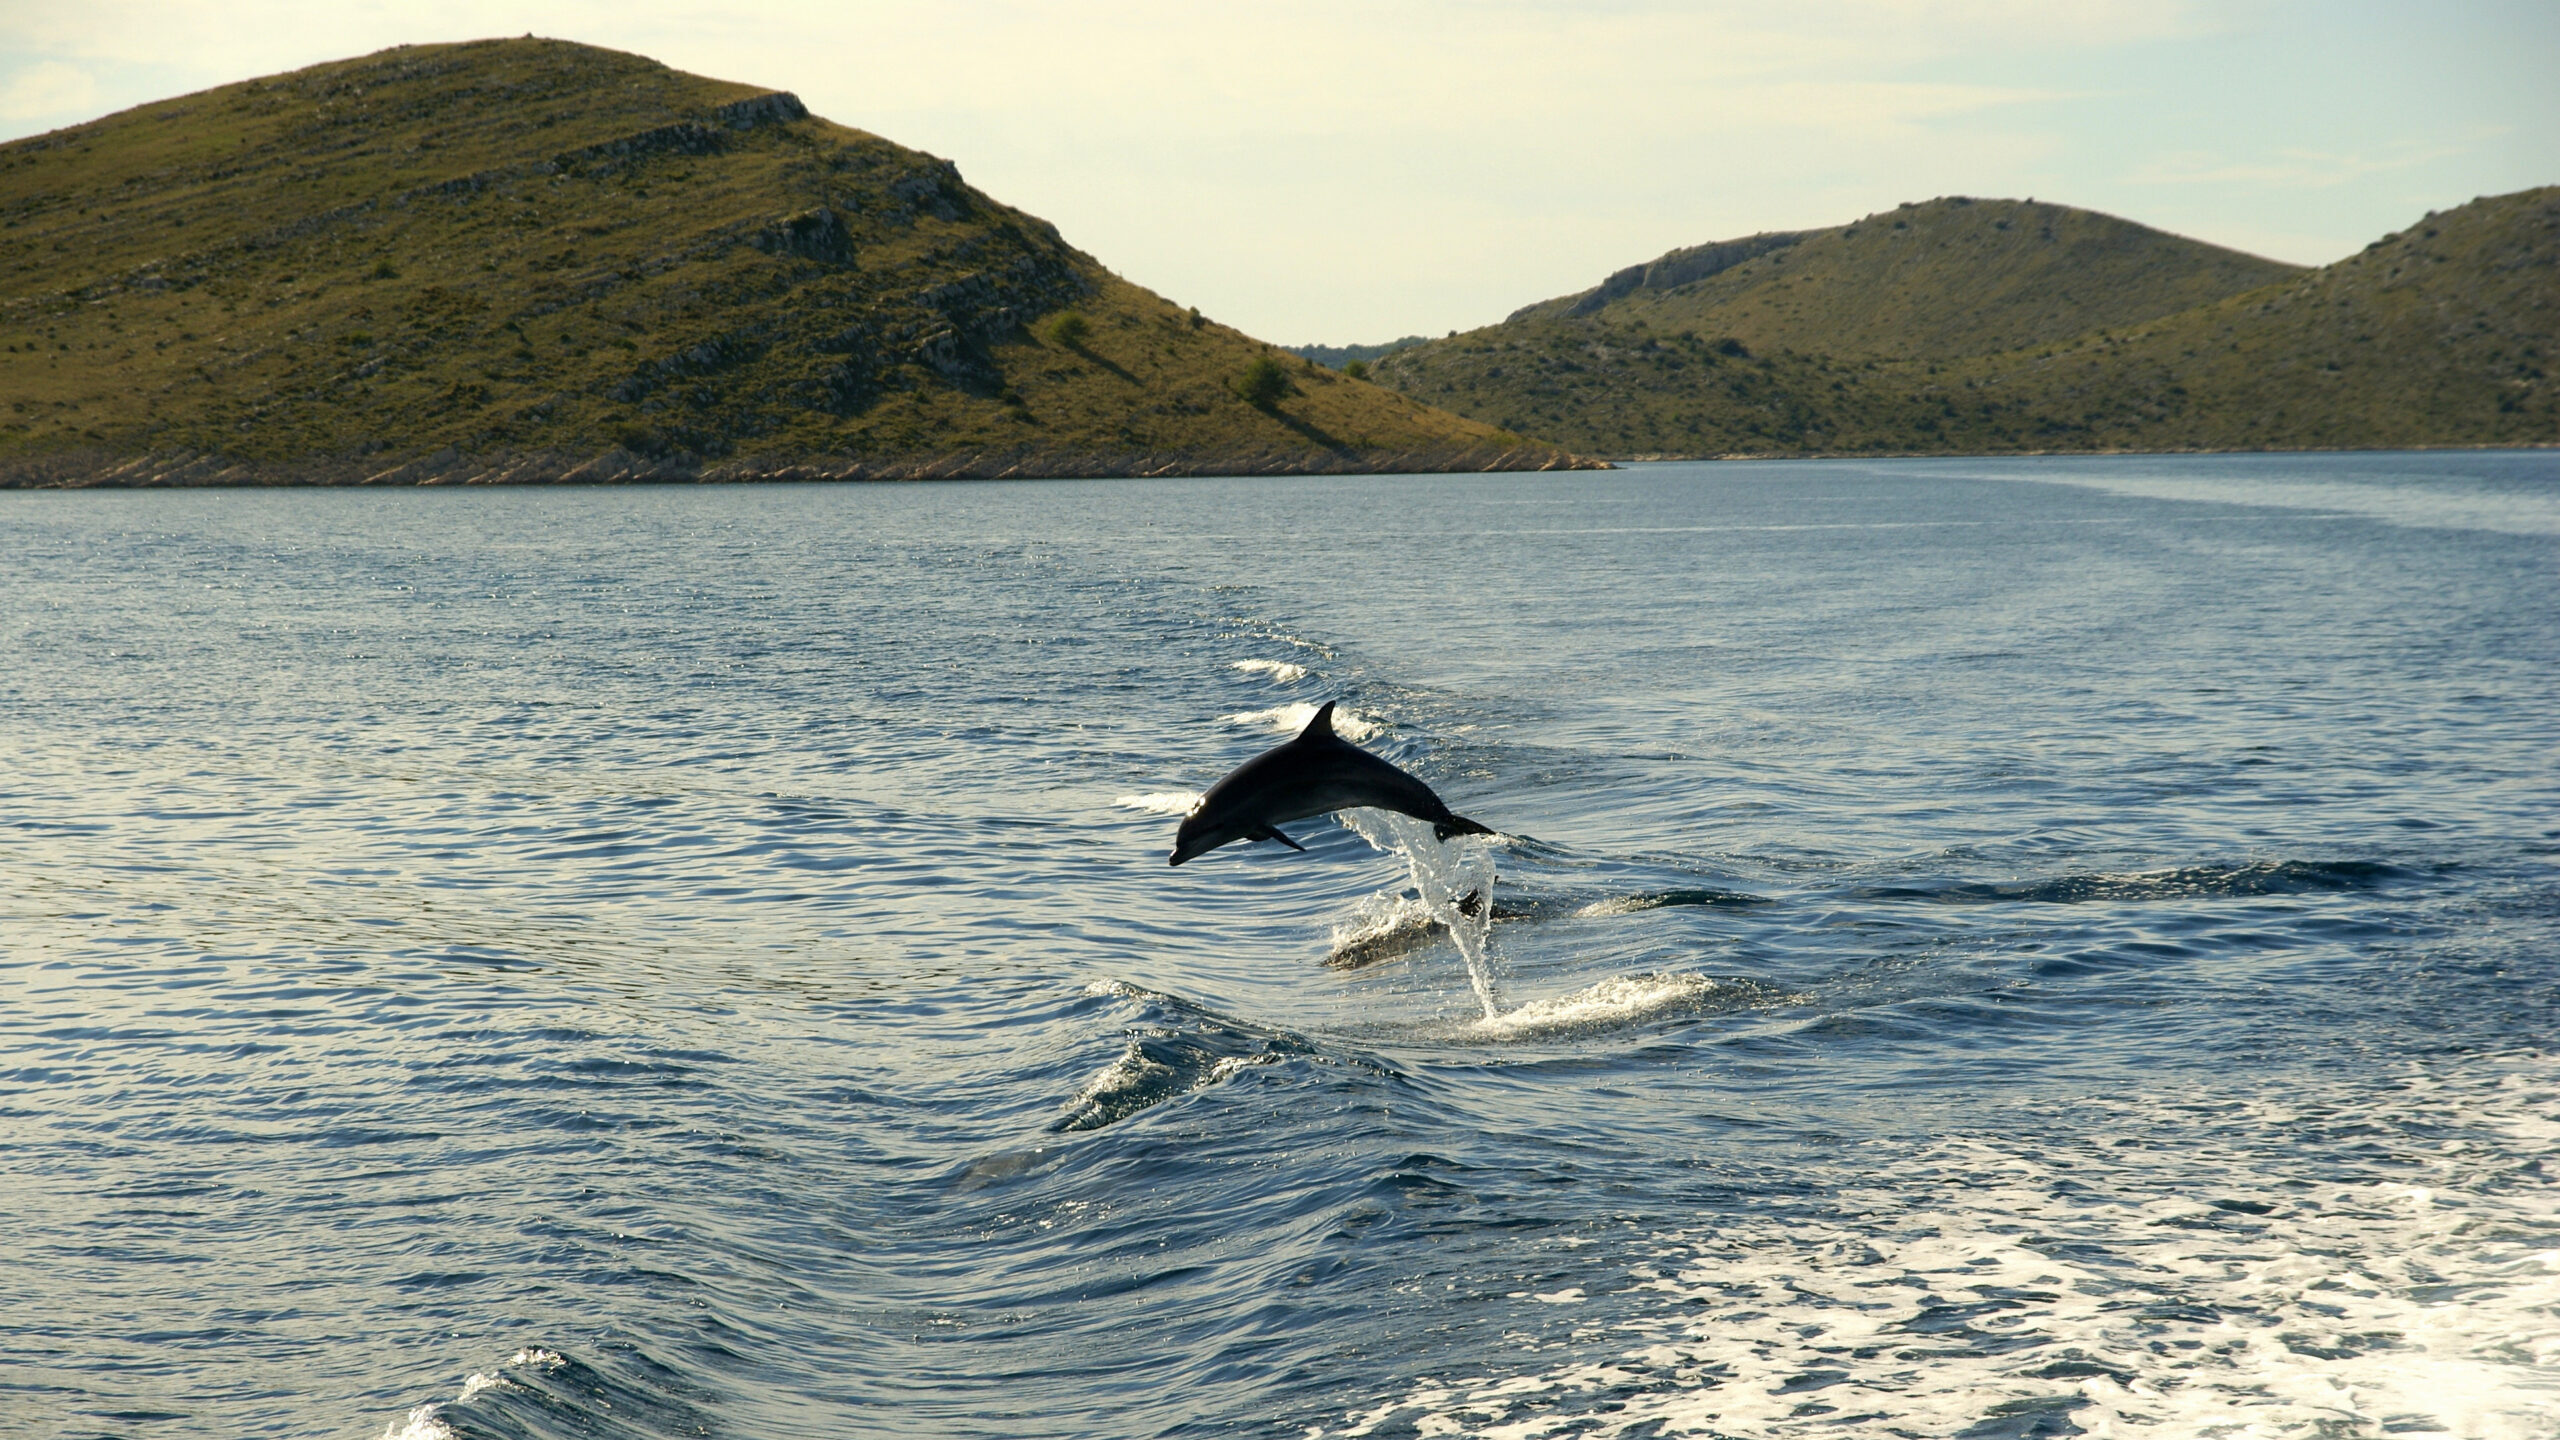 wildlife in Croatia - dolphins swimming in the ocean